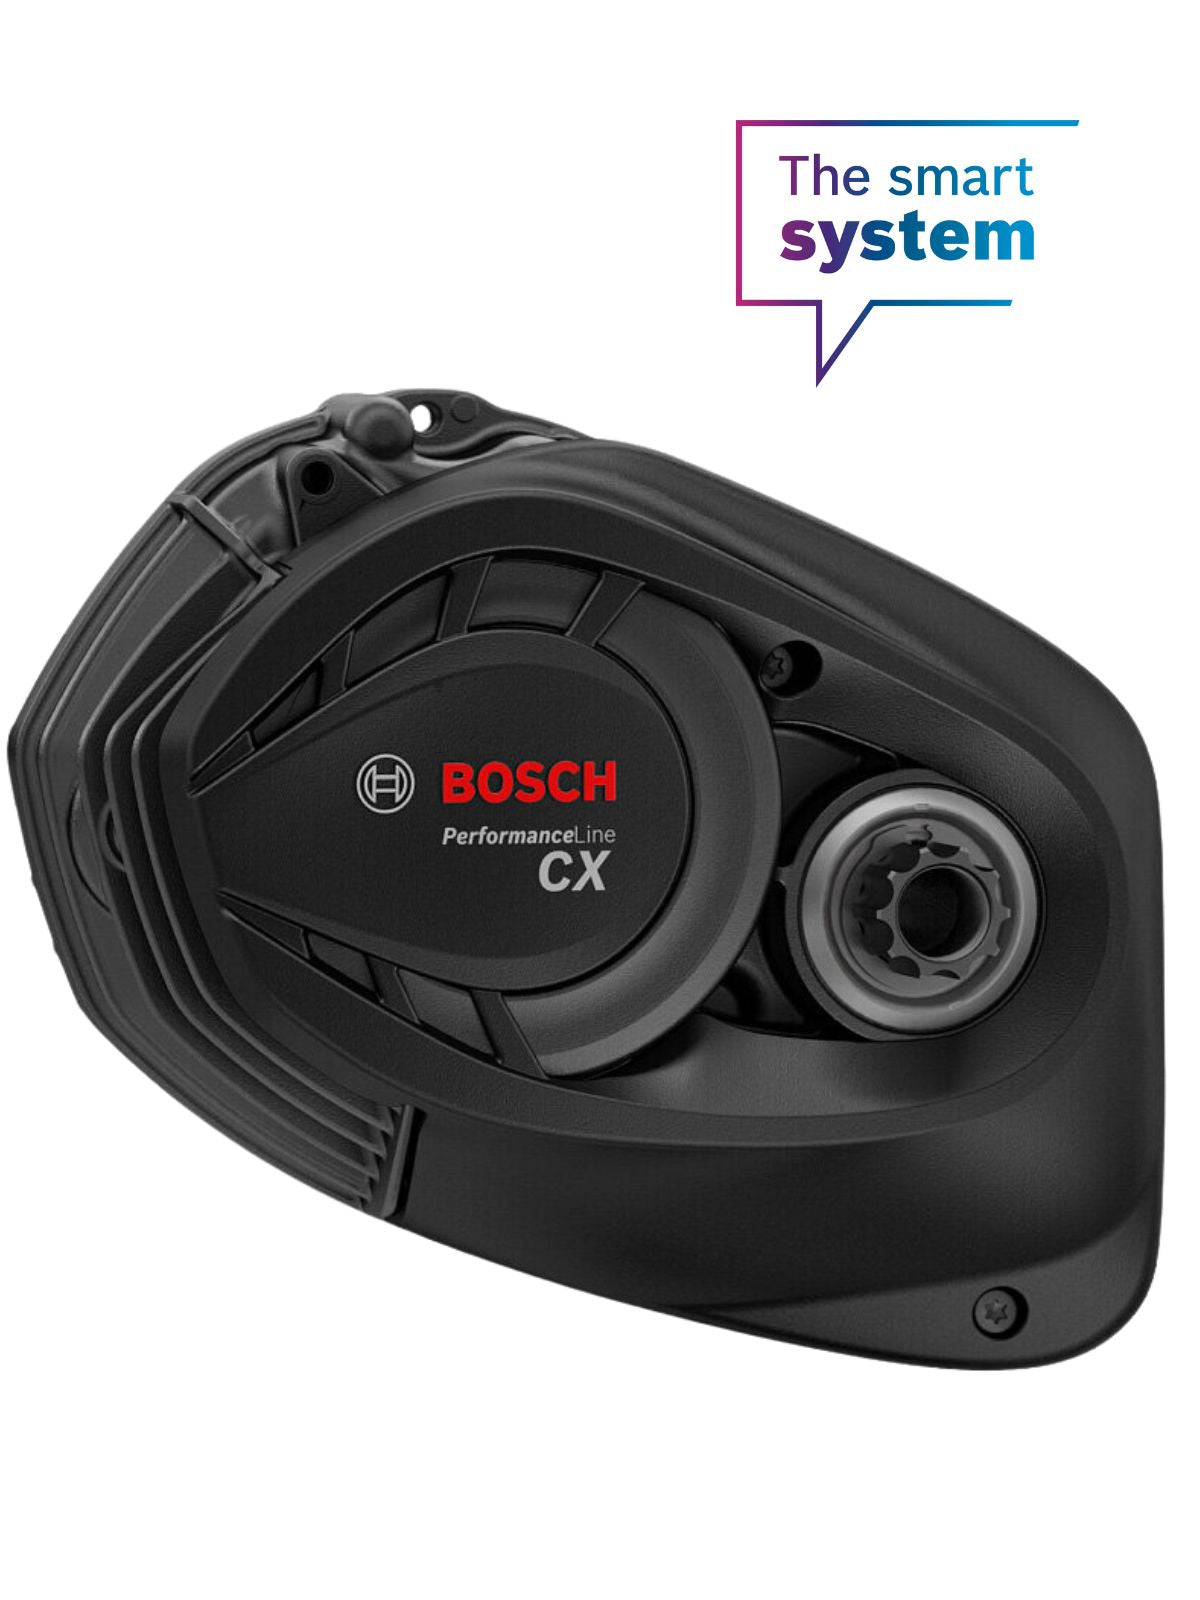 bosch smart system performance cx ebike motor